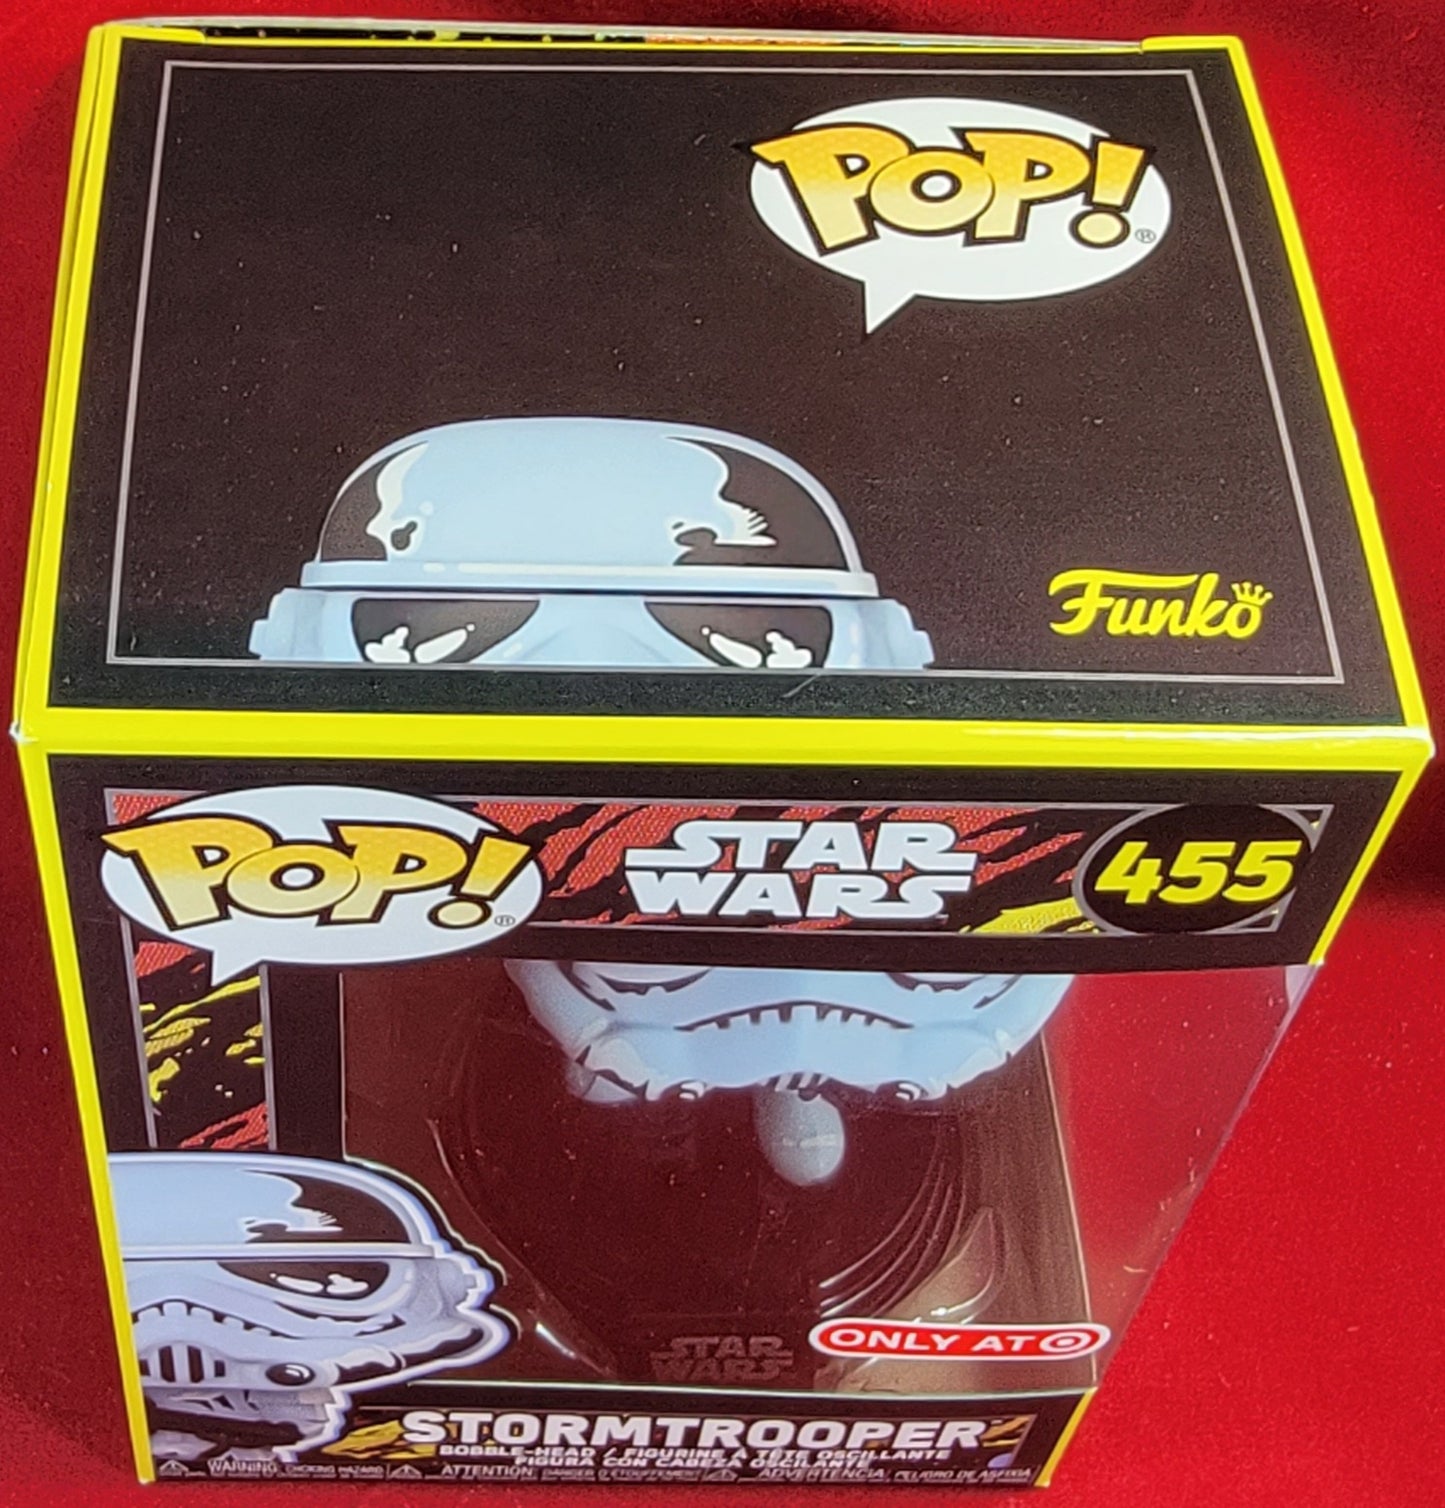 Stormtrooper target exclusive Funko # 455 Star Wars Pop (nib)